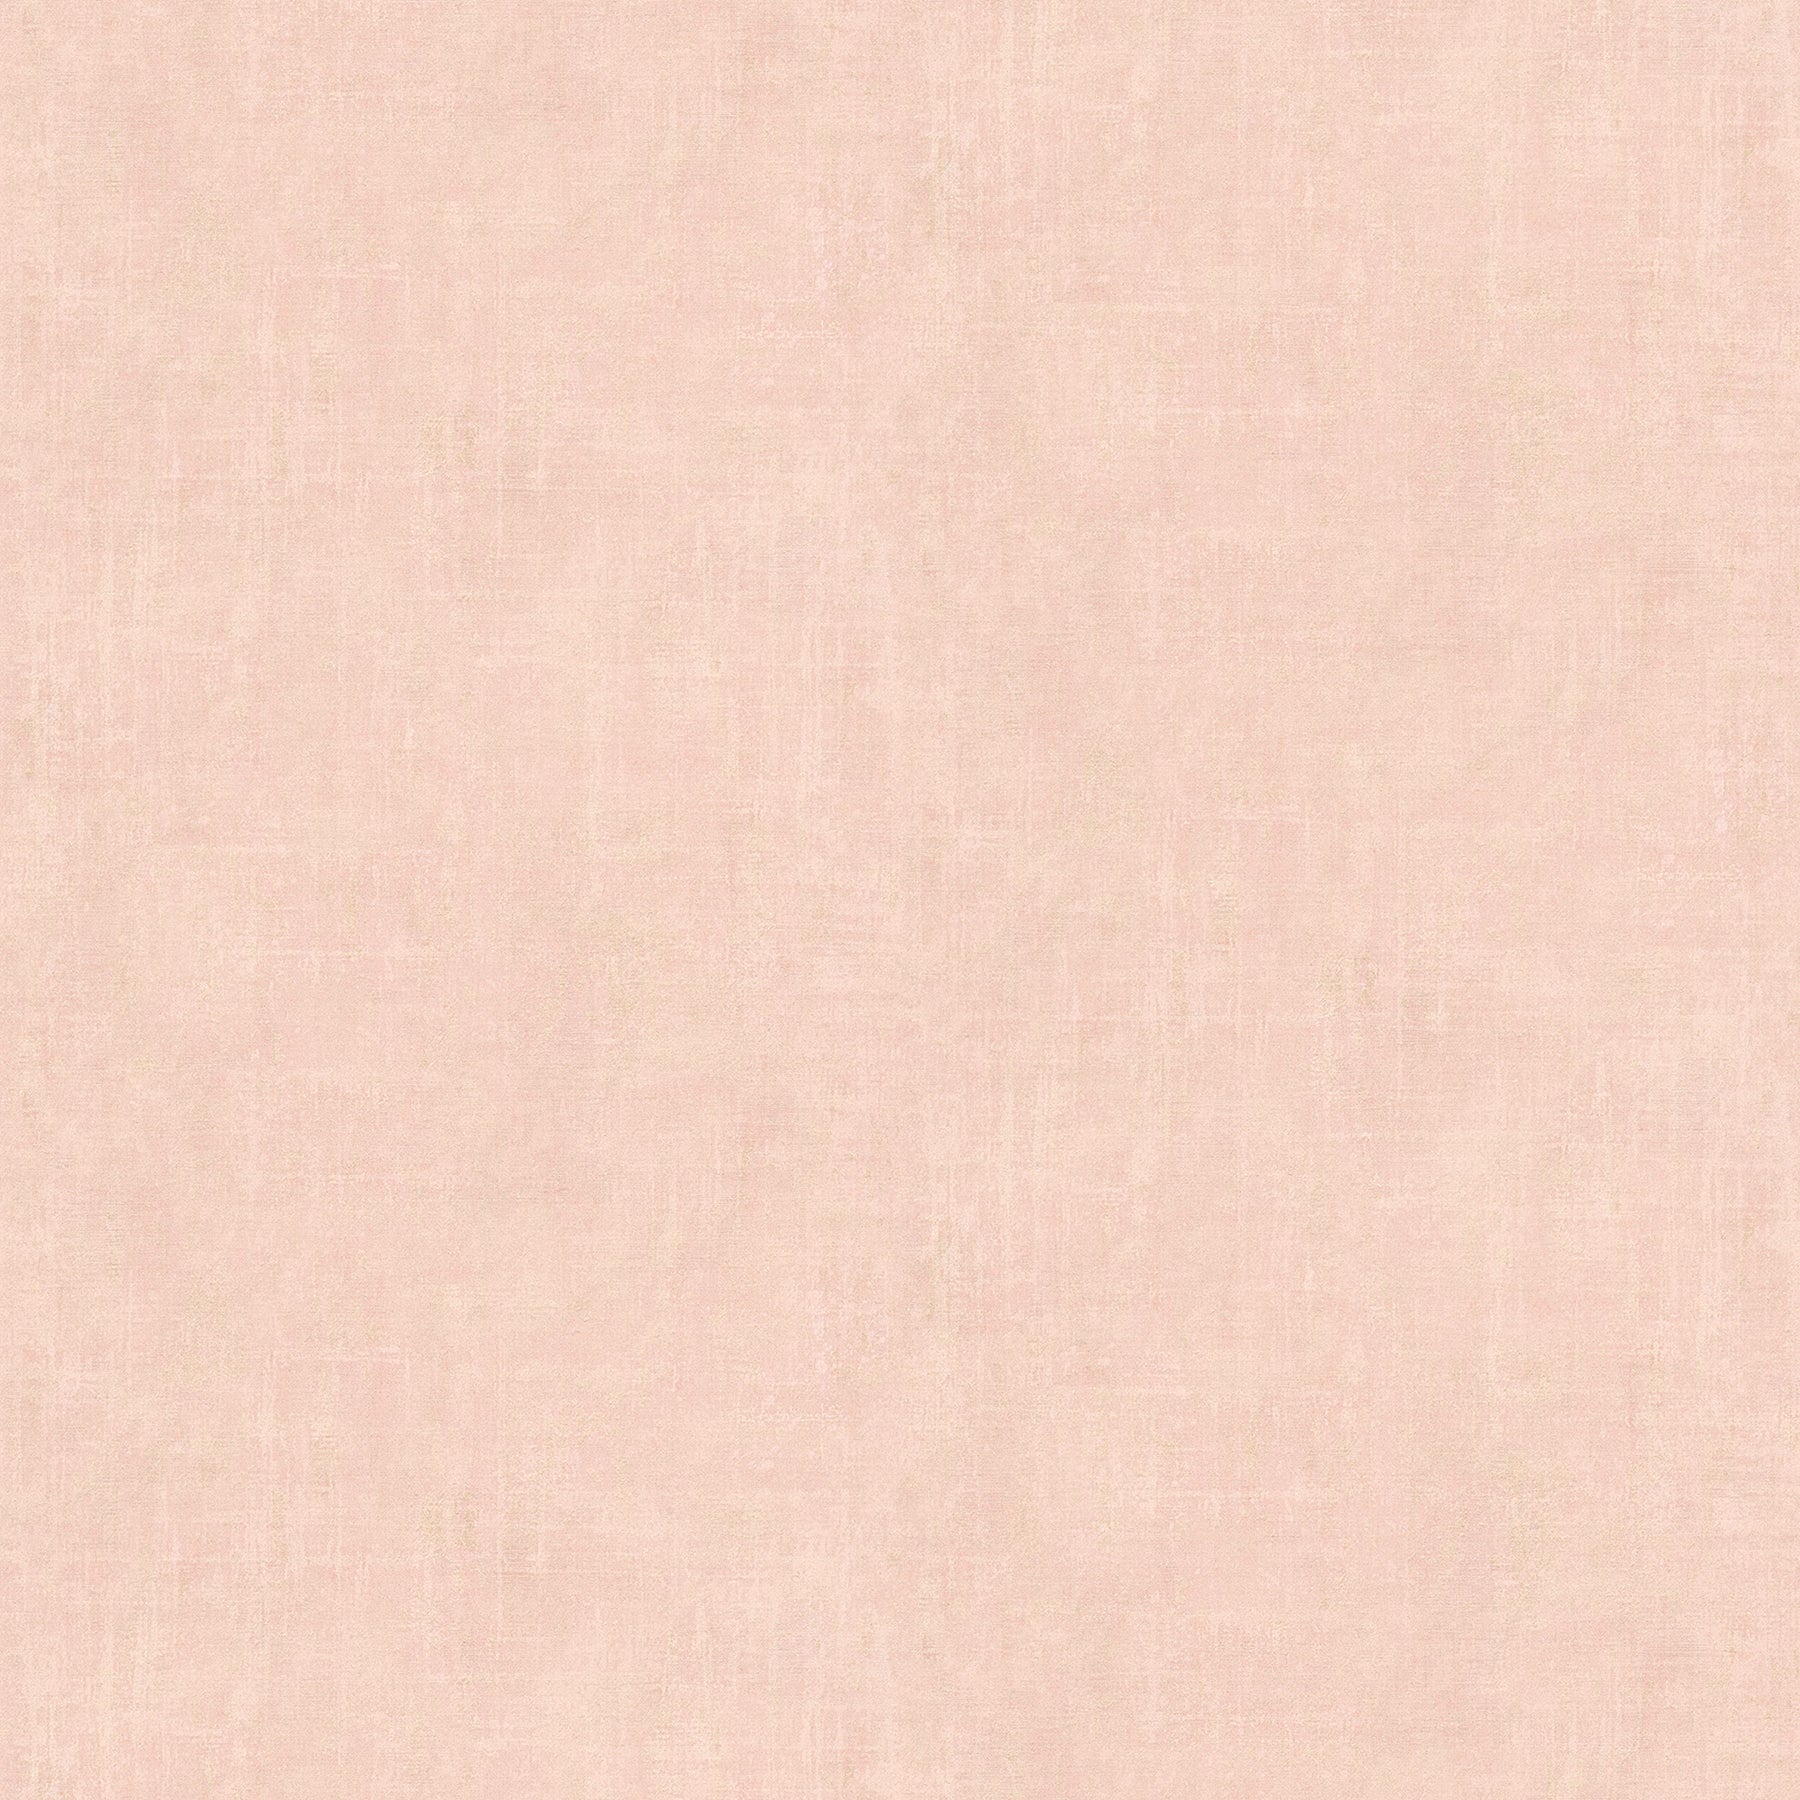 Buy 4044-38024-6 Cuba Riomar Blush Distressed Texture Wallpaper Pink by Advantage